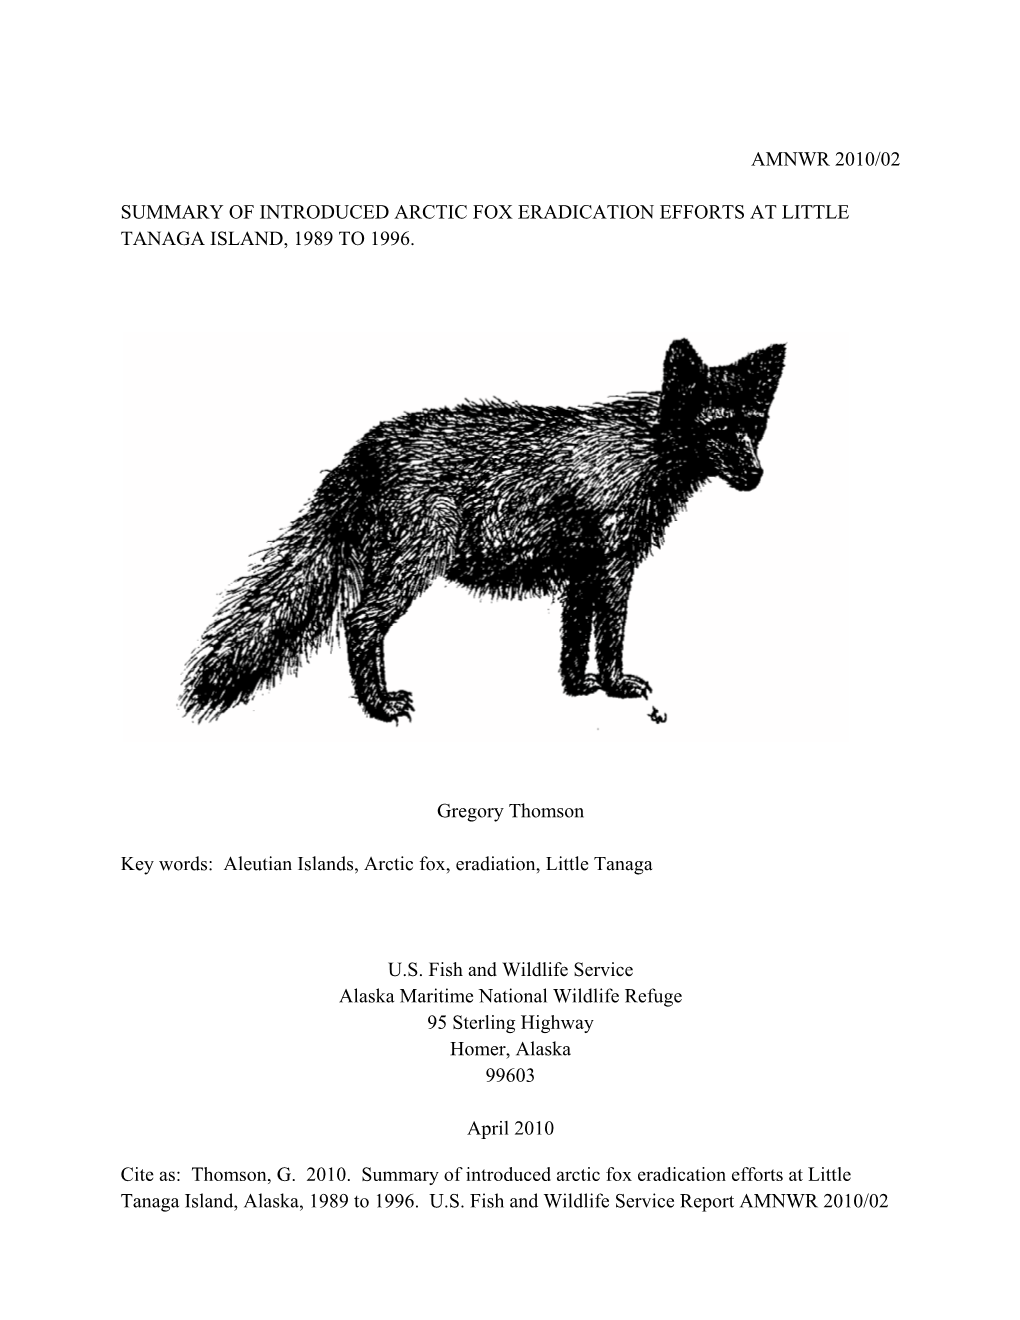 Summary of Introduced Arctic Fox Eradication Efforts at Little Tanaga Island, 1989 to 1996